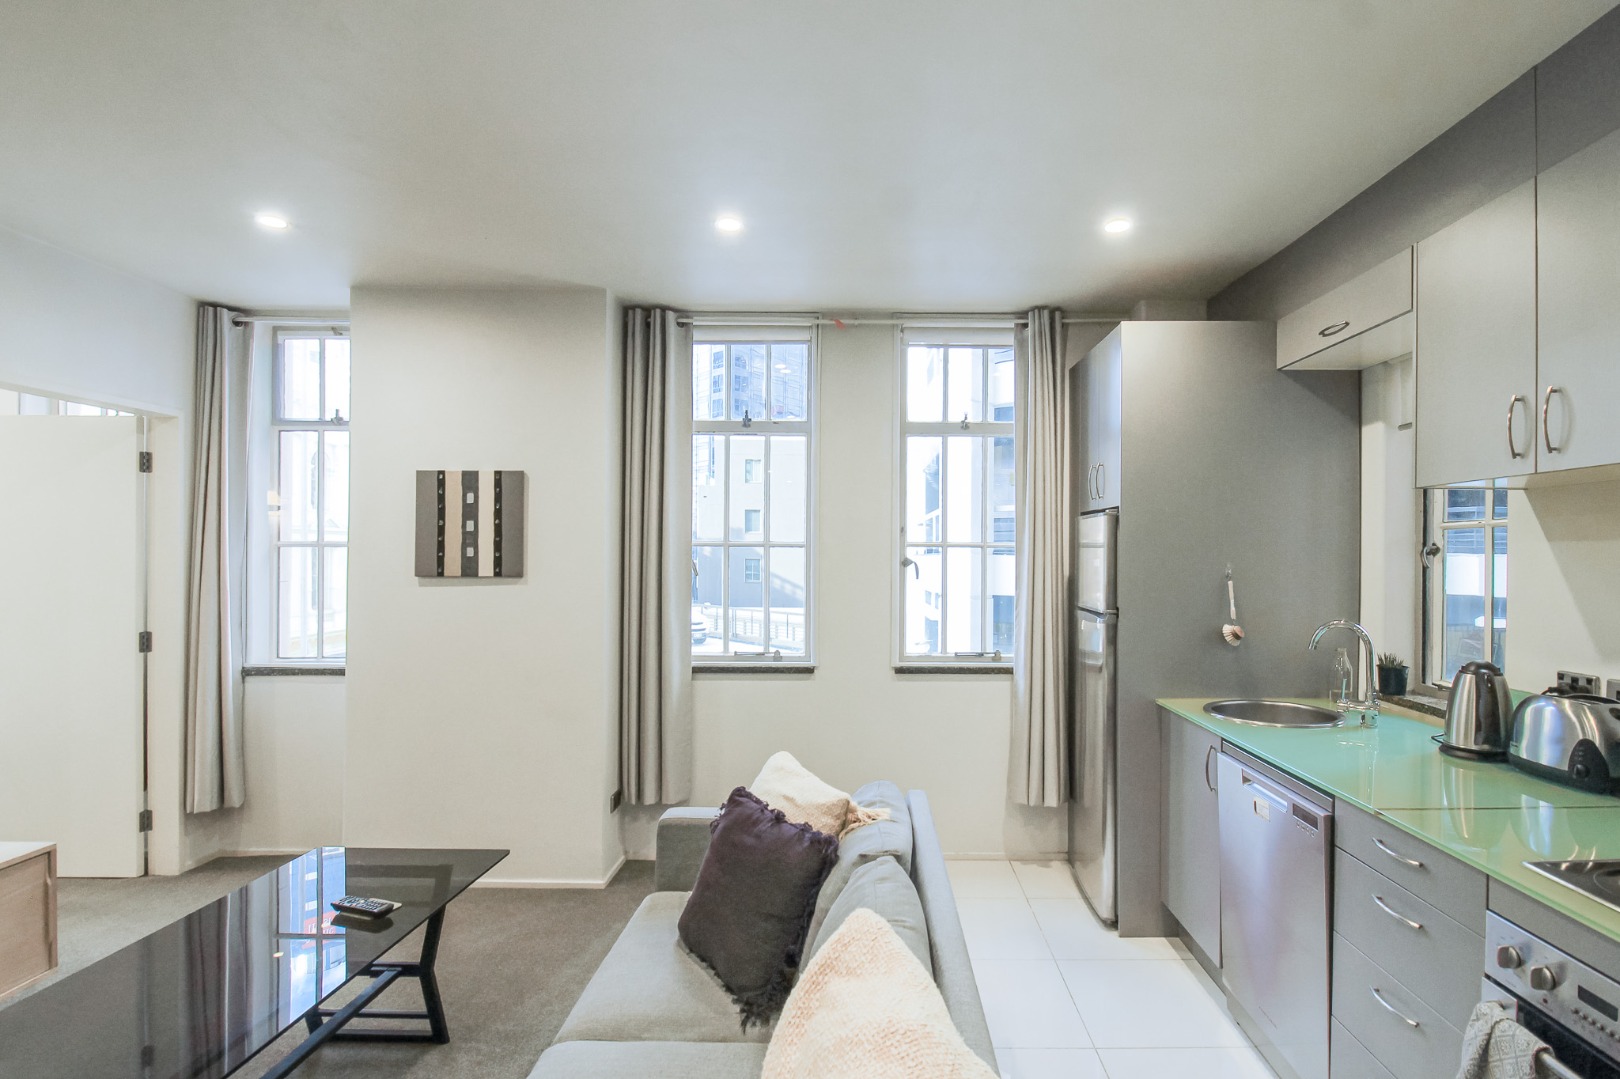 Real Estate For Rent Houses & Apartments : Golden Mile Gem Urban Living, Wellington